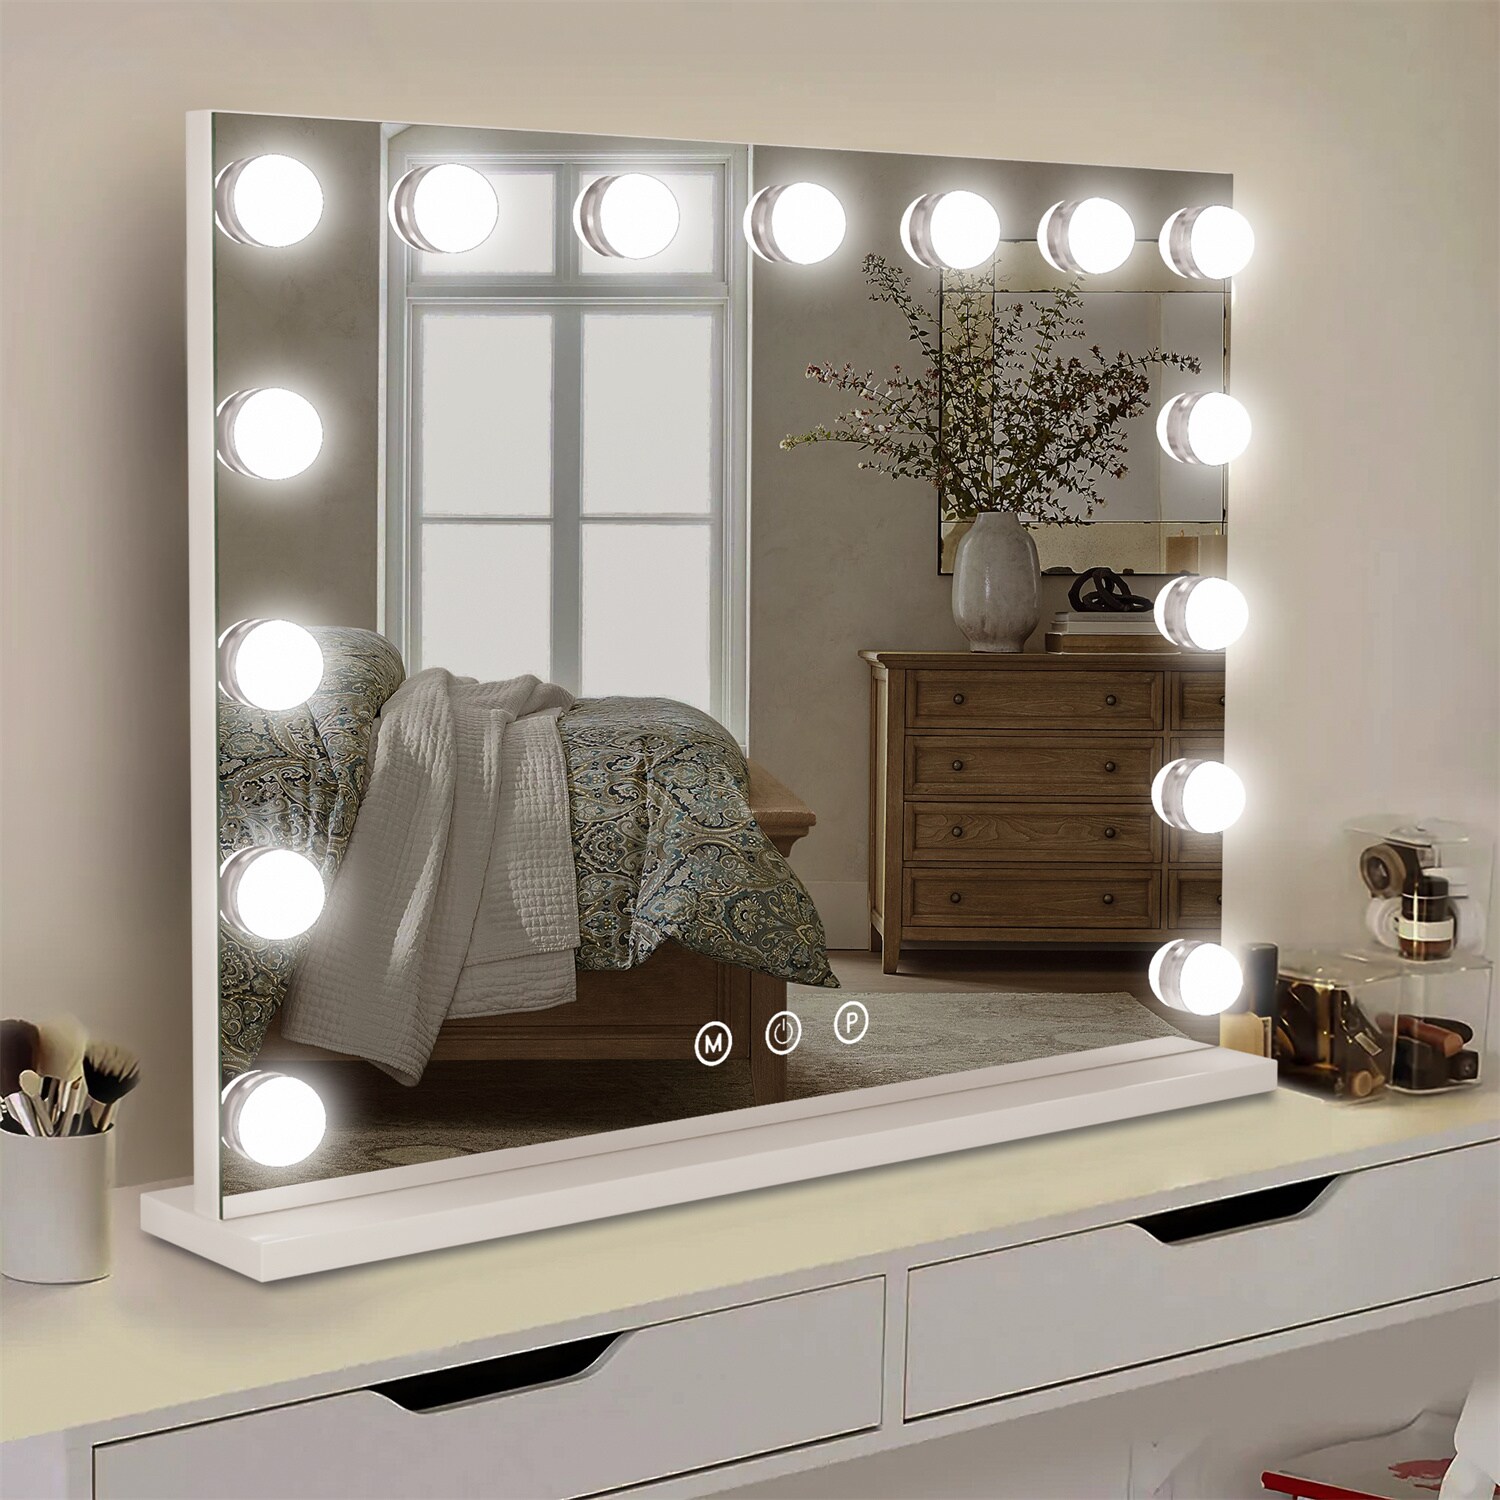 Diamond at Lowes - Organization - Vanity Mirror with Storage